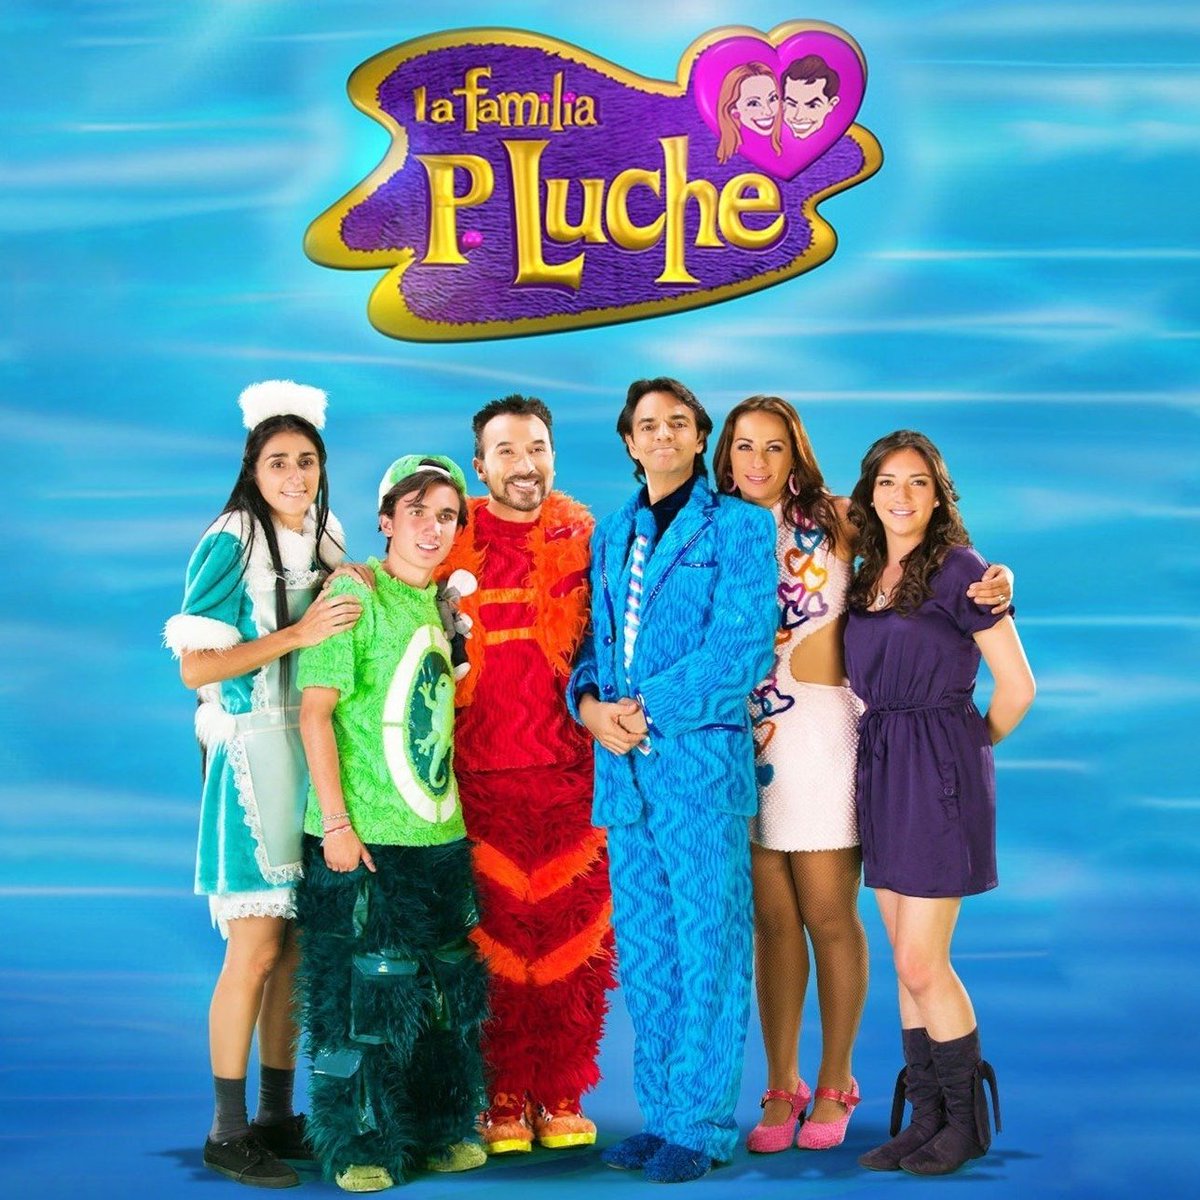 La Familia P.Luche' premiered 19 years ago on Televisa. pic.twitter.co...